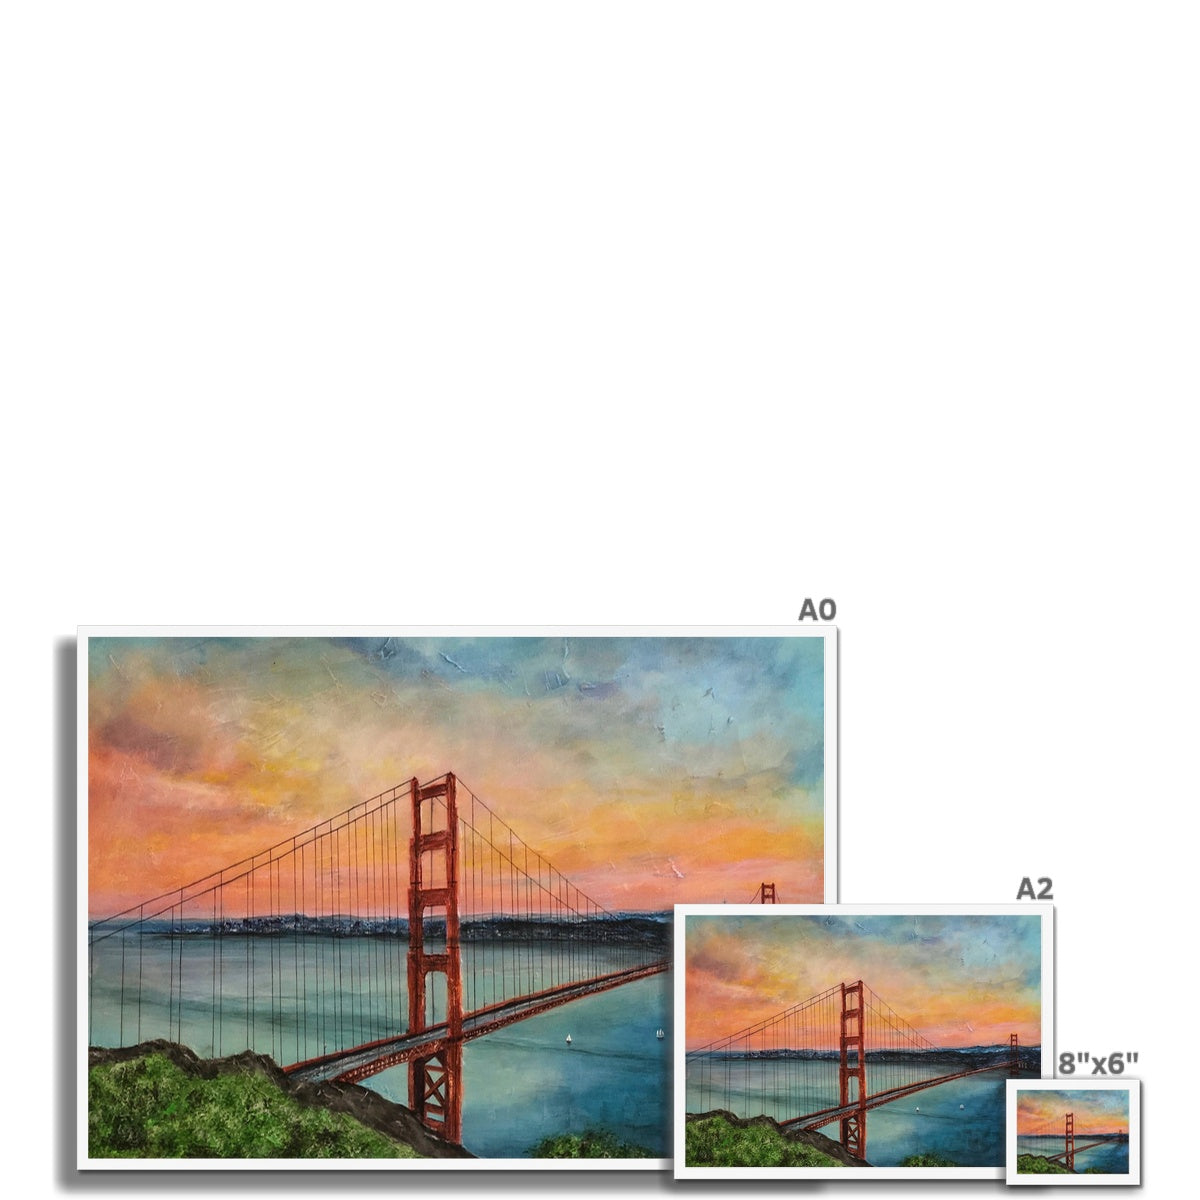 The Golden Gate Bridge Painting | Framed Prints From Scotland-Framed Prints-World Art Gallery-Paintings, Prints, Homeware, Art Gifts From Scotland By Scottish Artist Kevin Hunter